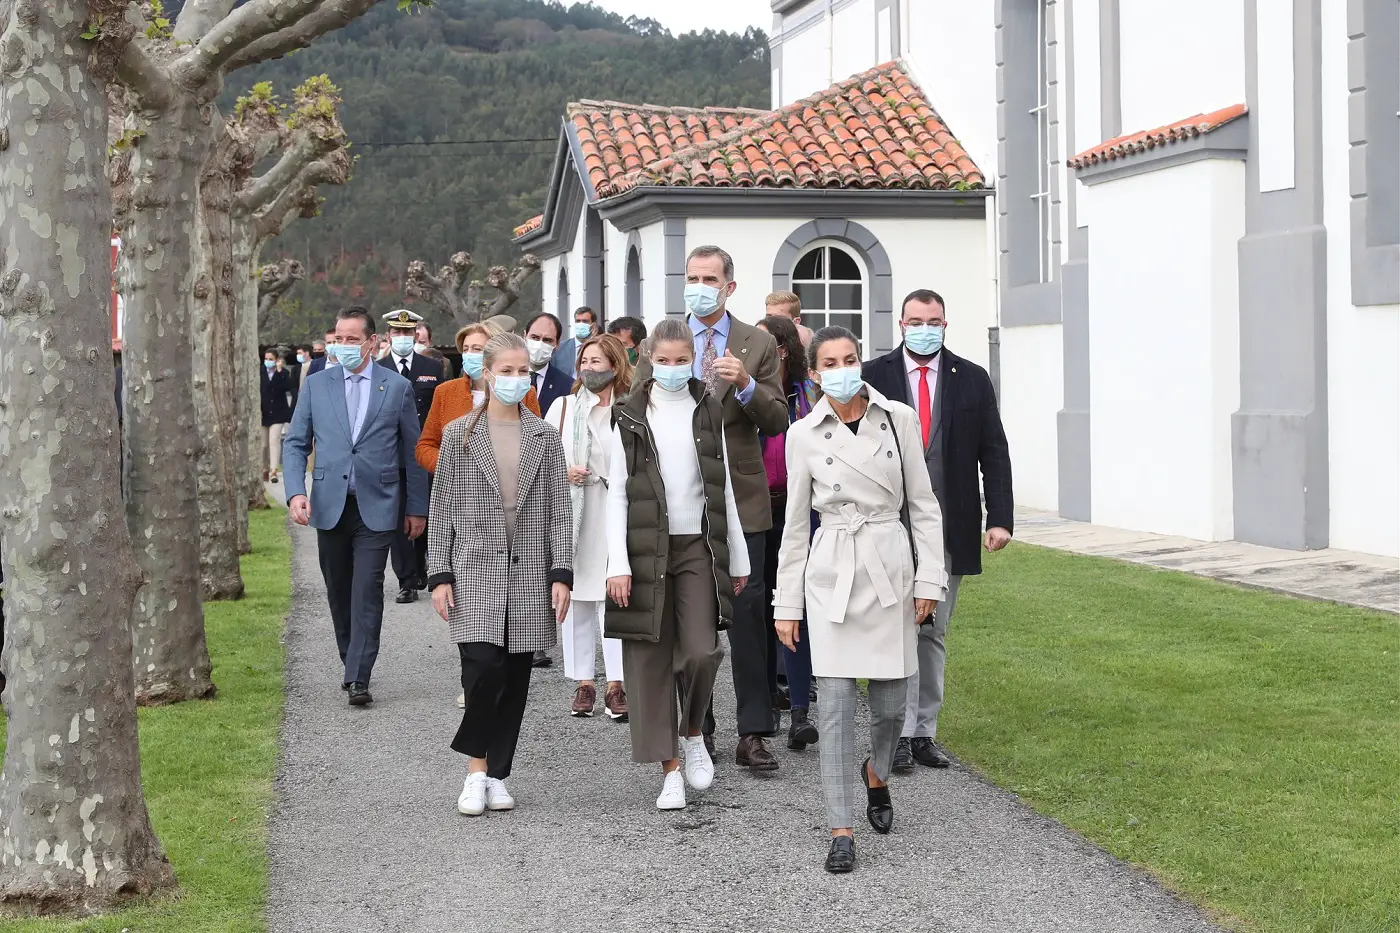 Queen Letizia in Boss Cirala coat during a visit Somao Exemplary Town of Asturias 2020